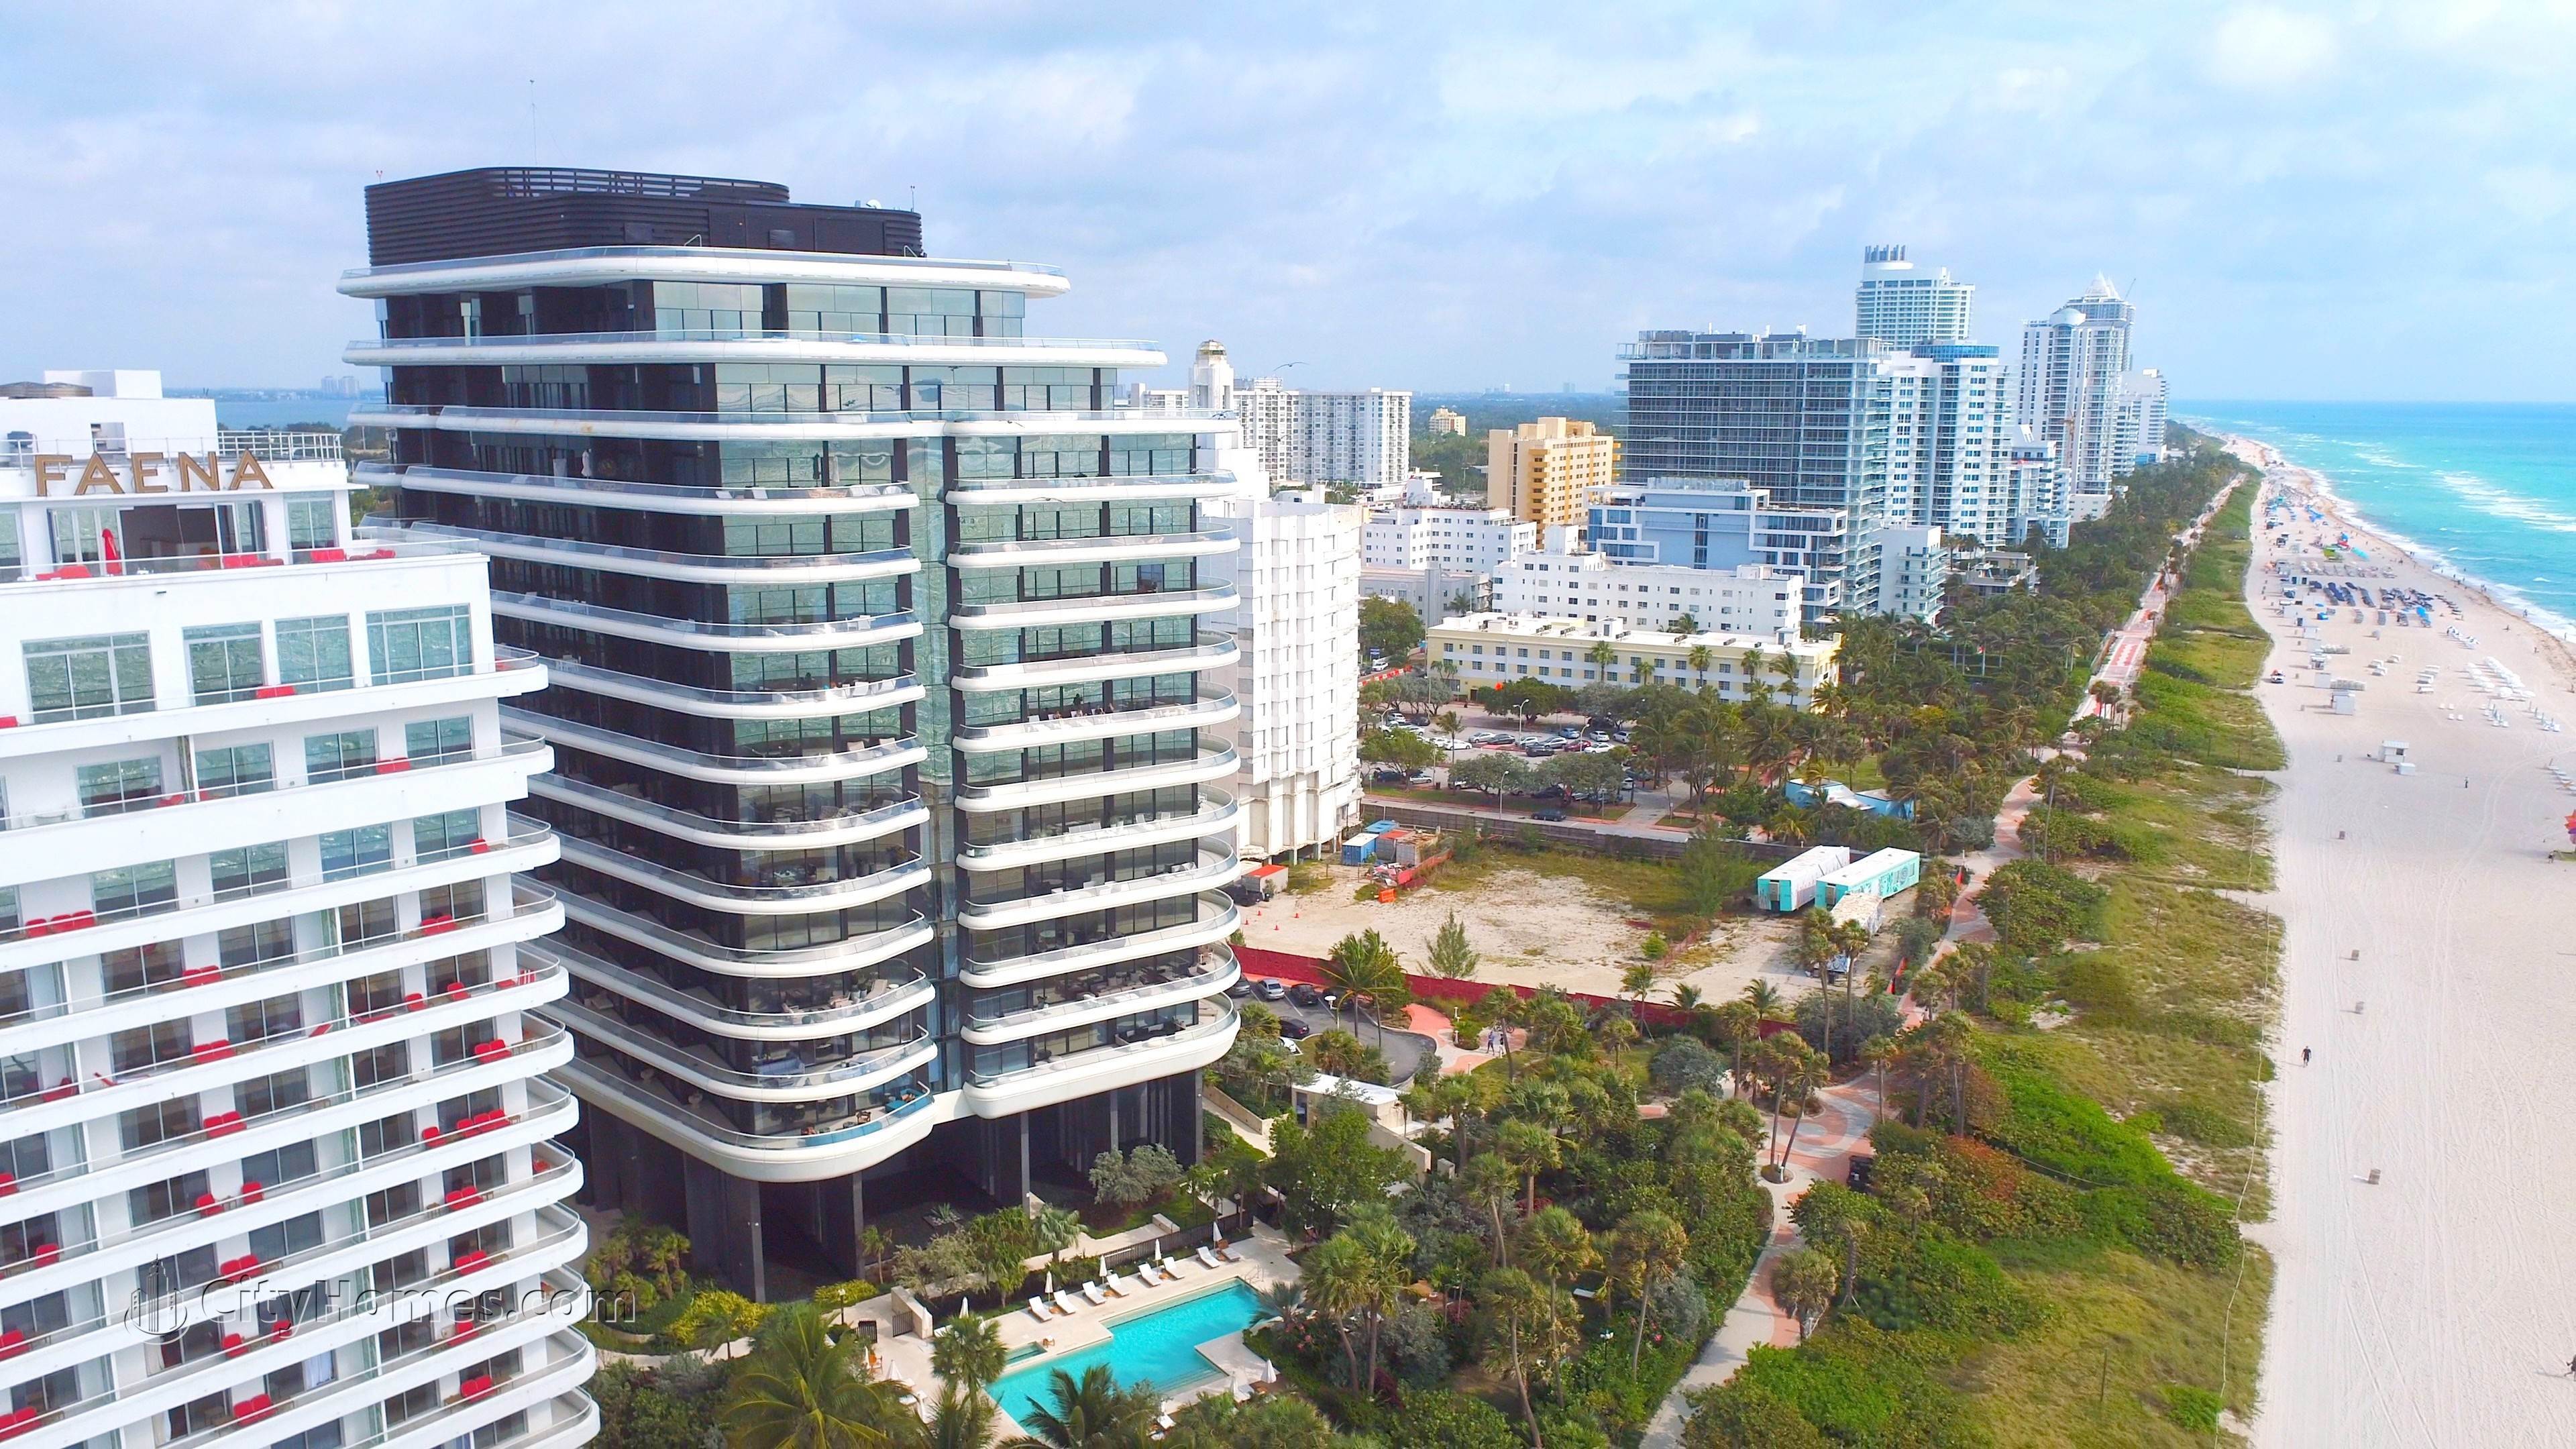 FAENA HOUSE MIAMI BEACH building at 3315 Collins Avenue, Mid Beach, Miami Beach, FL 33140